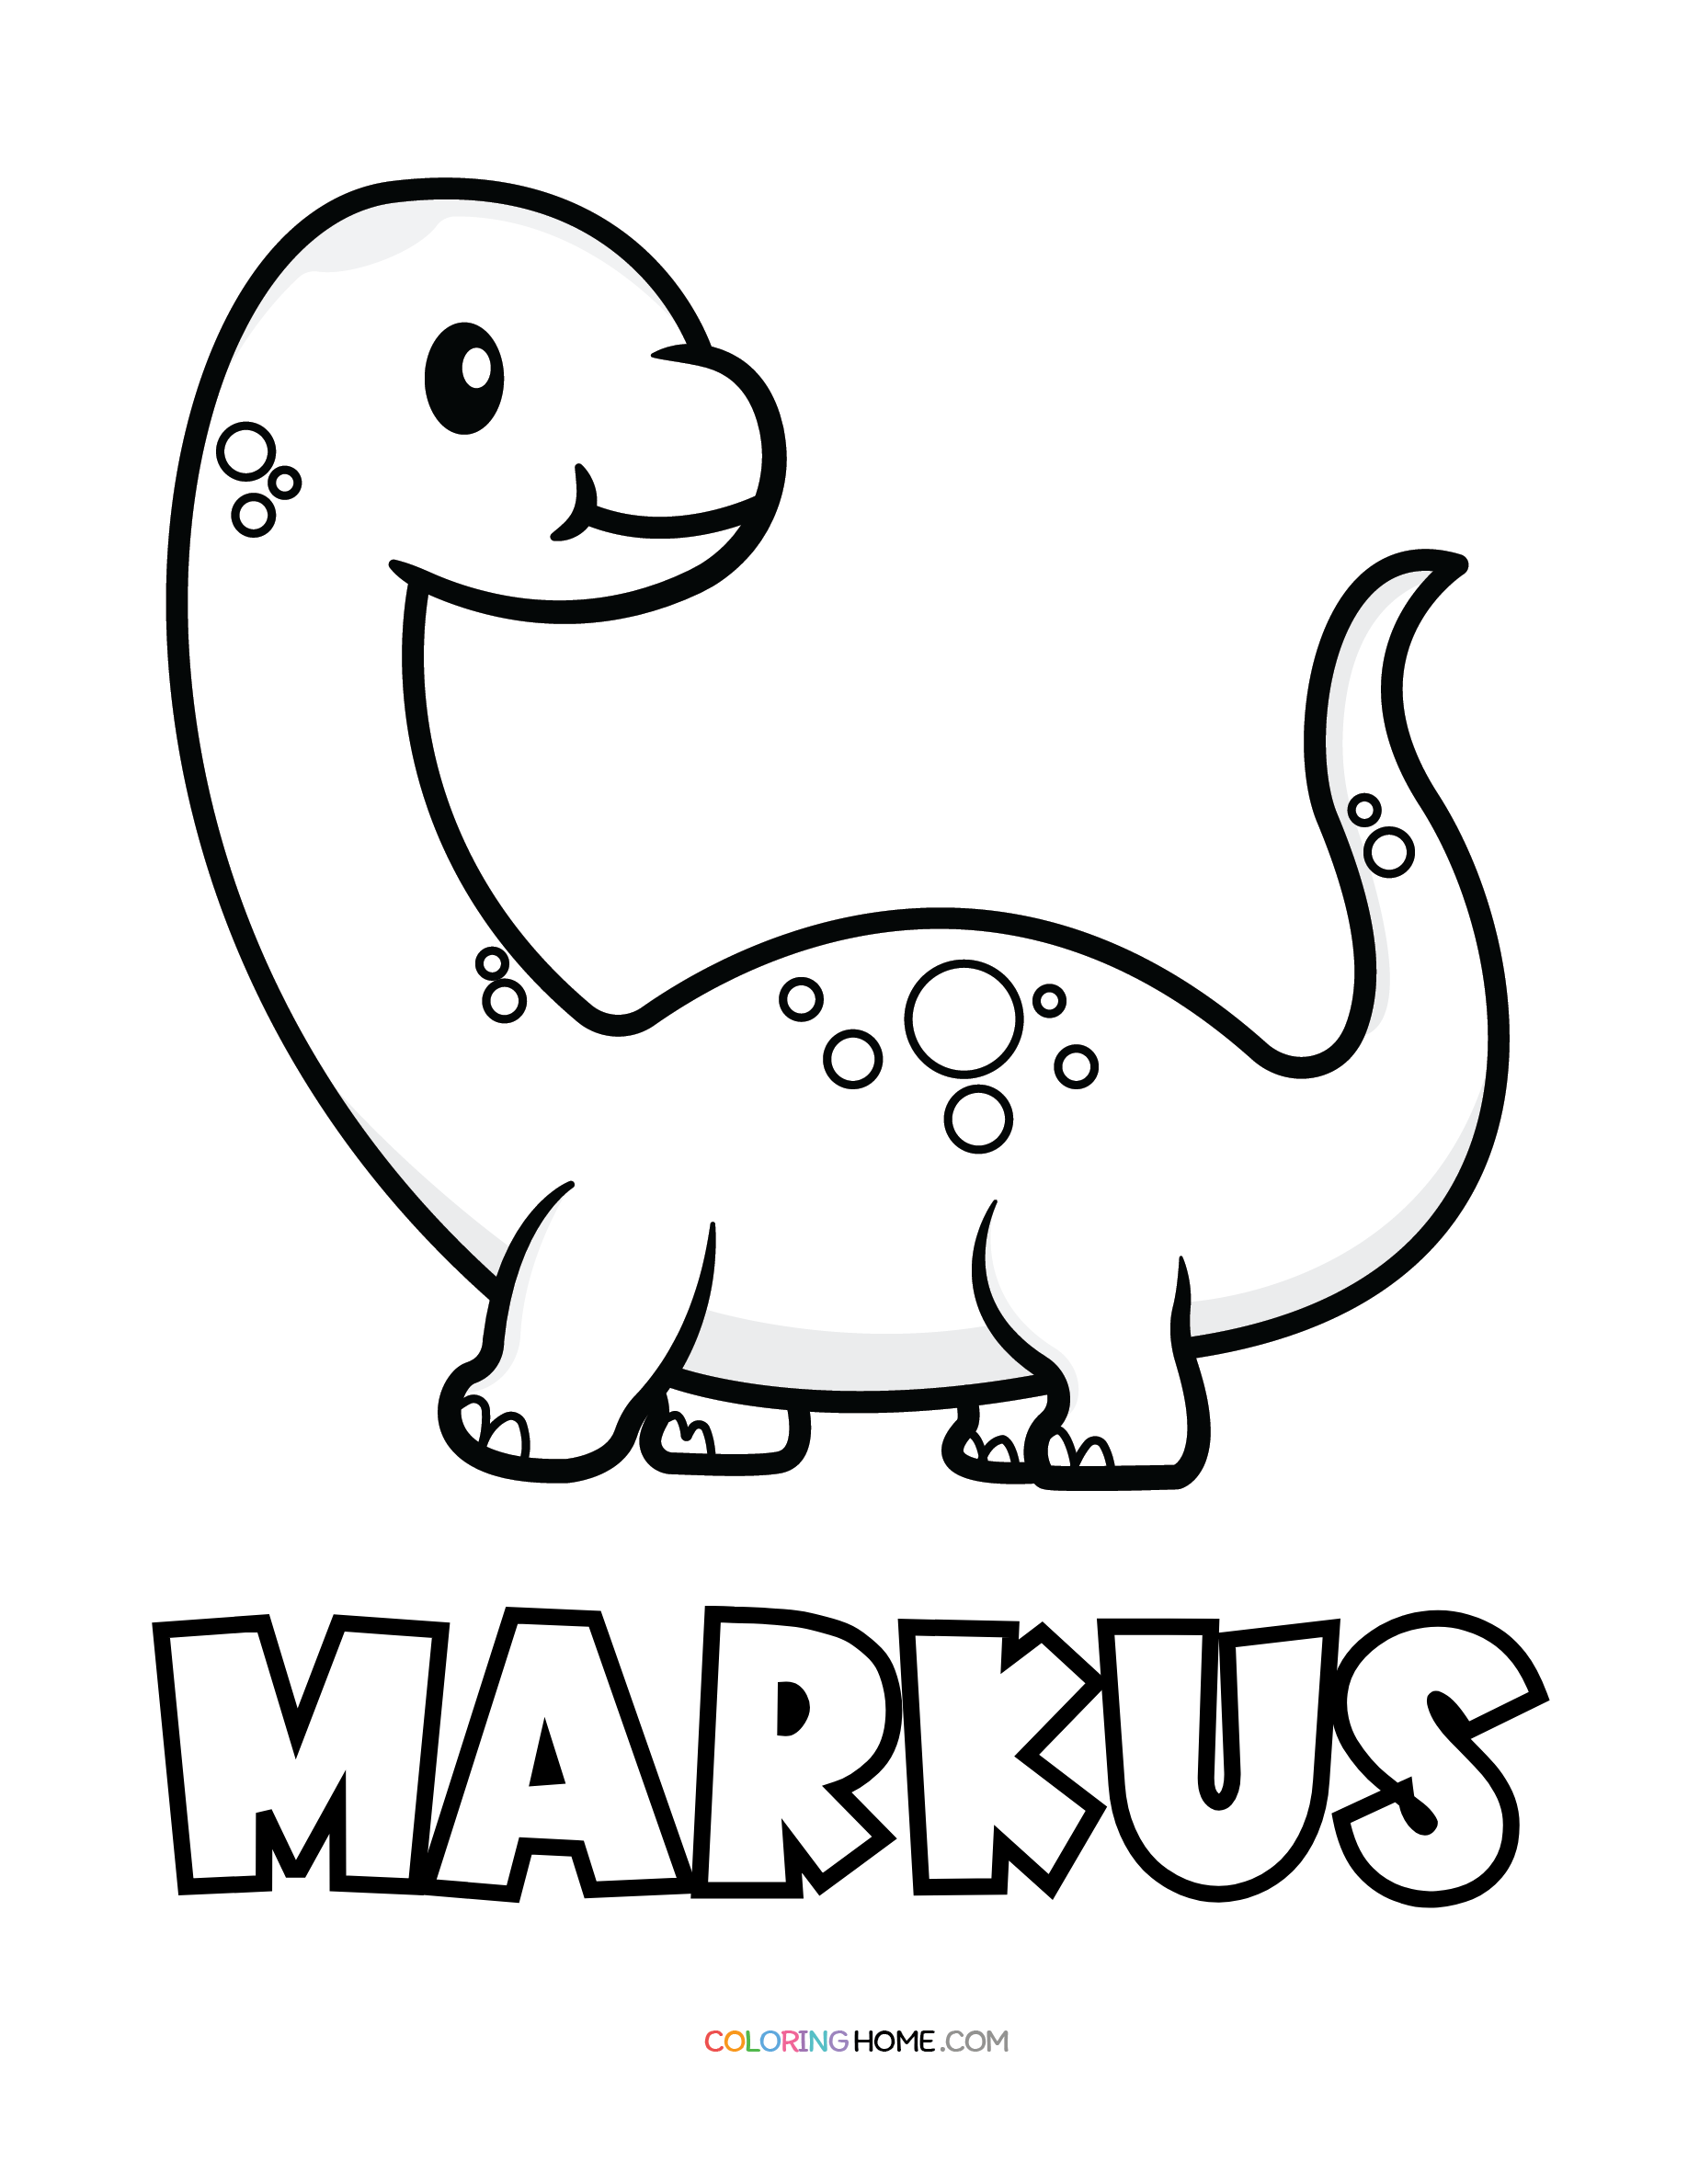 Markus dinosaur coloring page